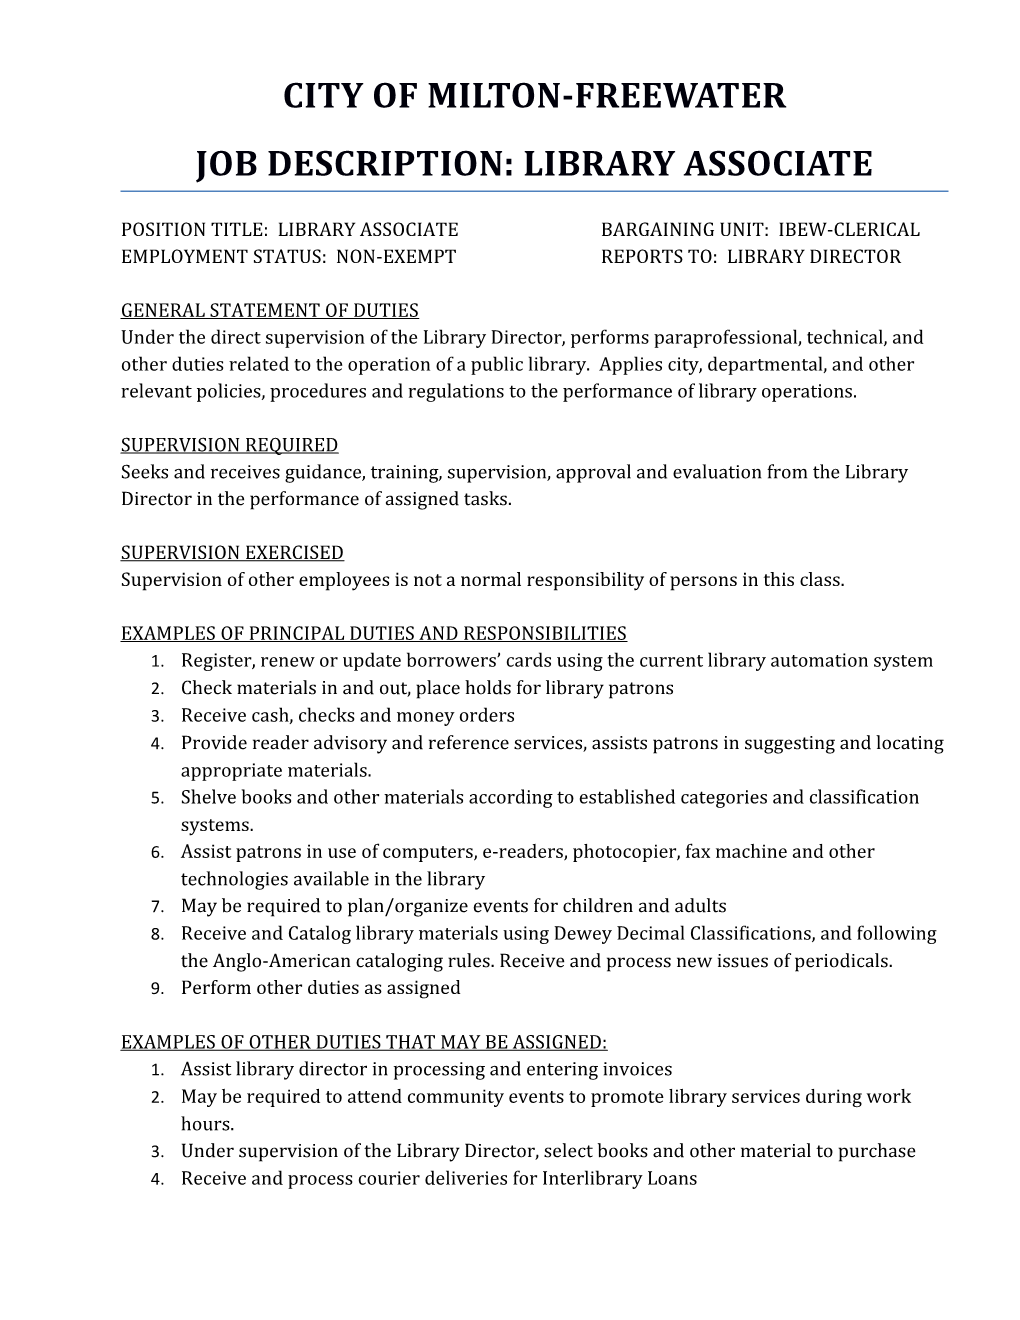 Job Description: Library Associate